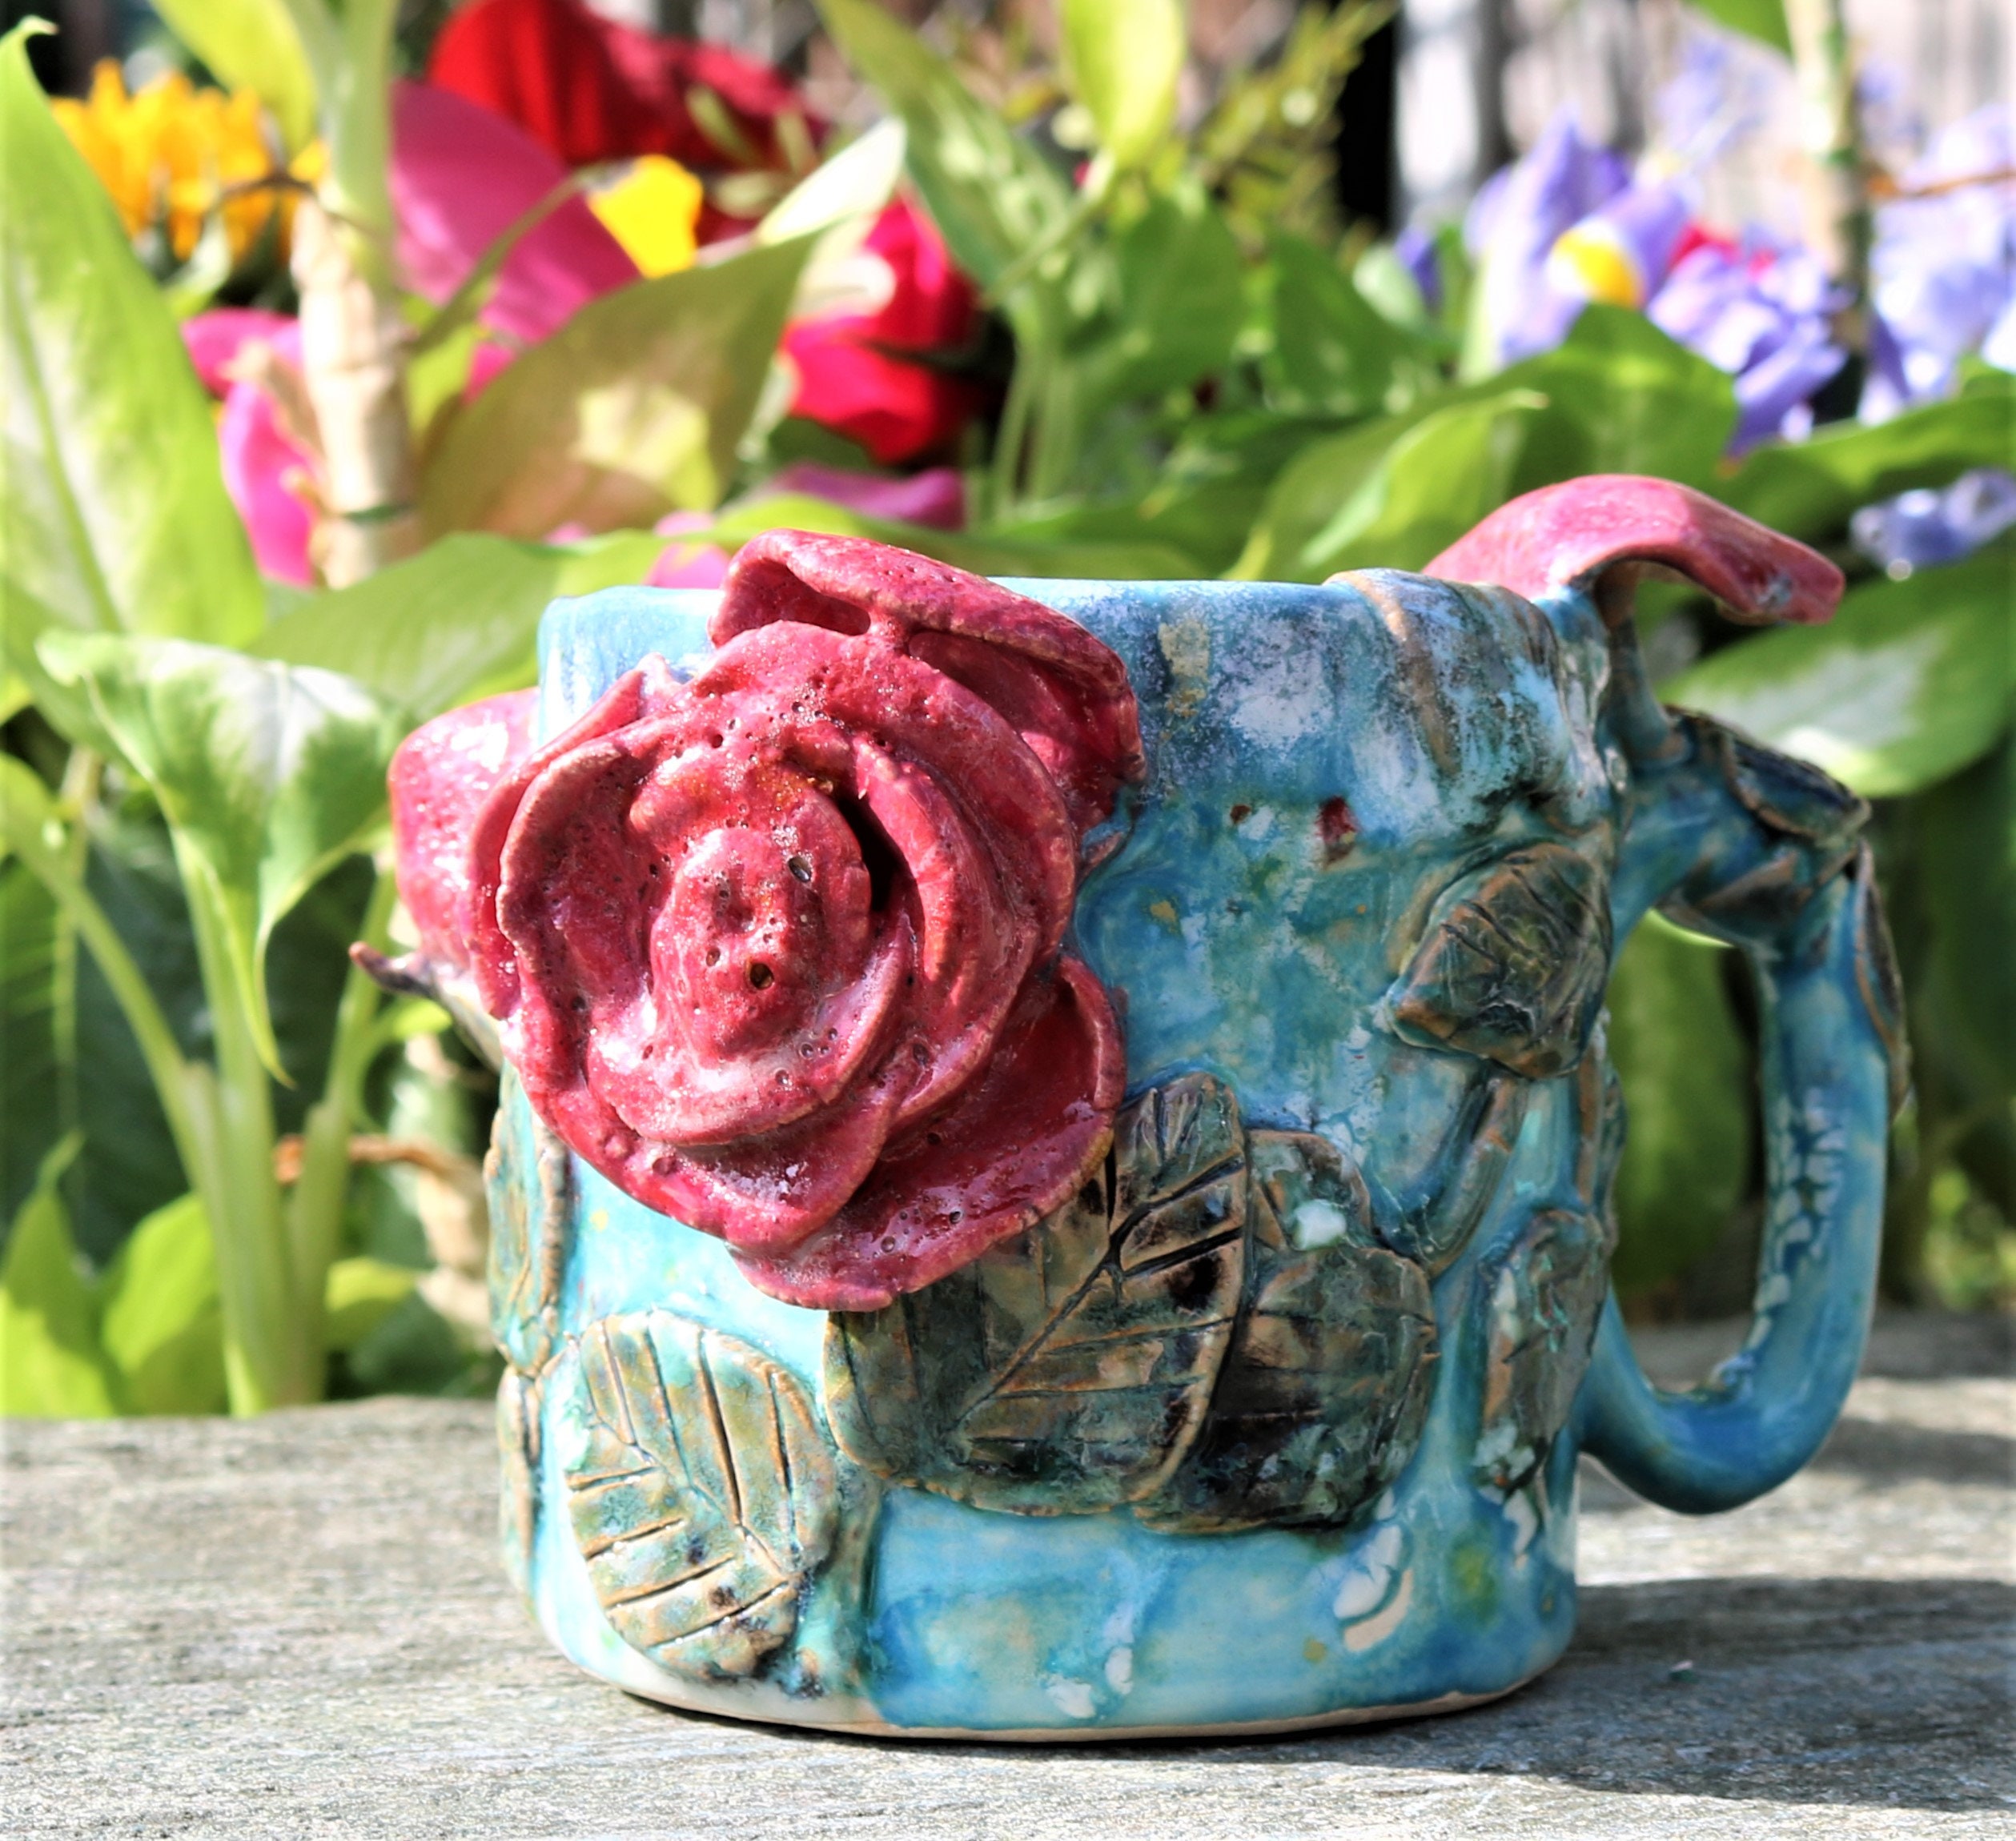 Roses Glass Mug for Women, Hand Painted Mug, Pink Flowers Large